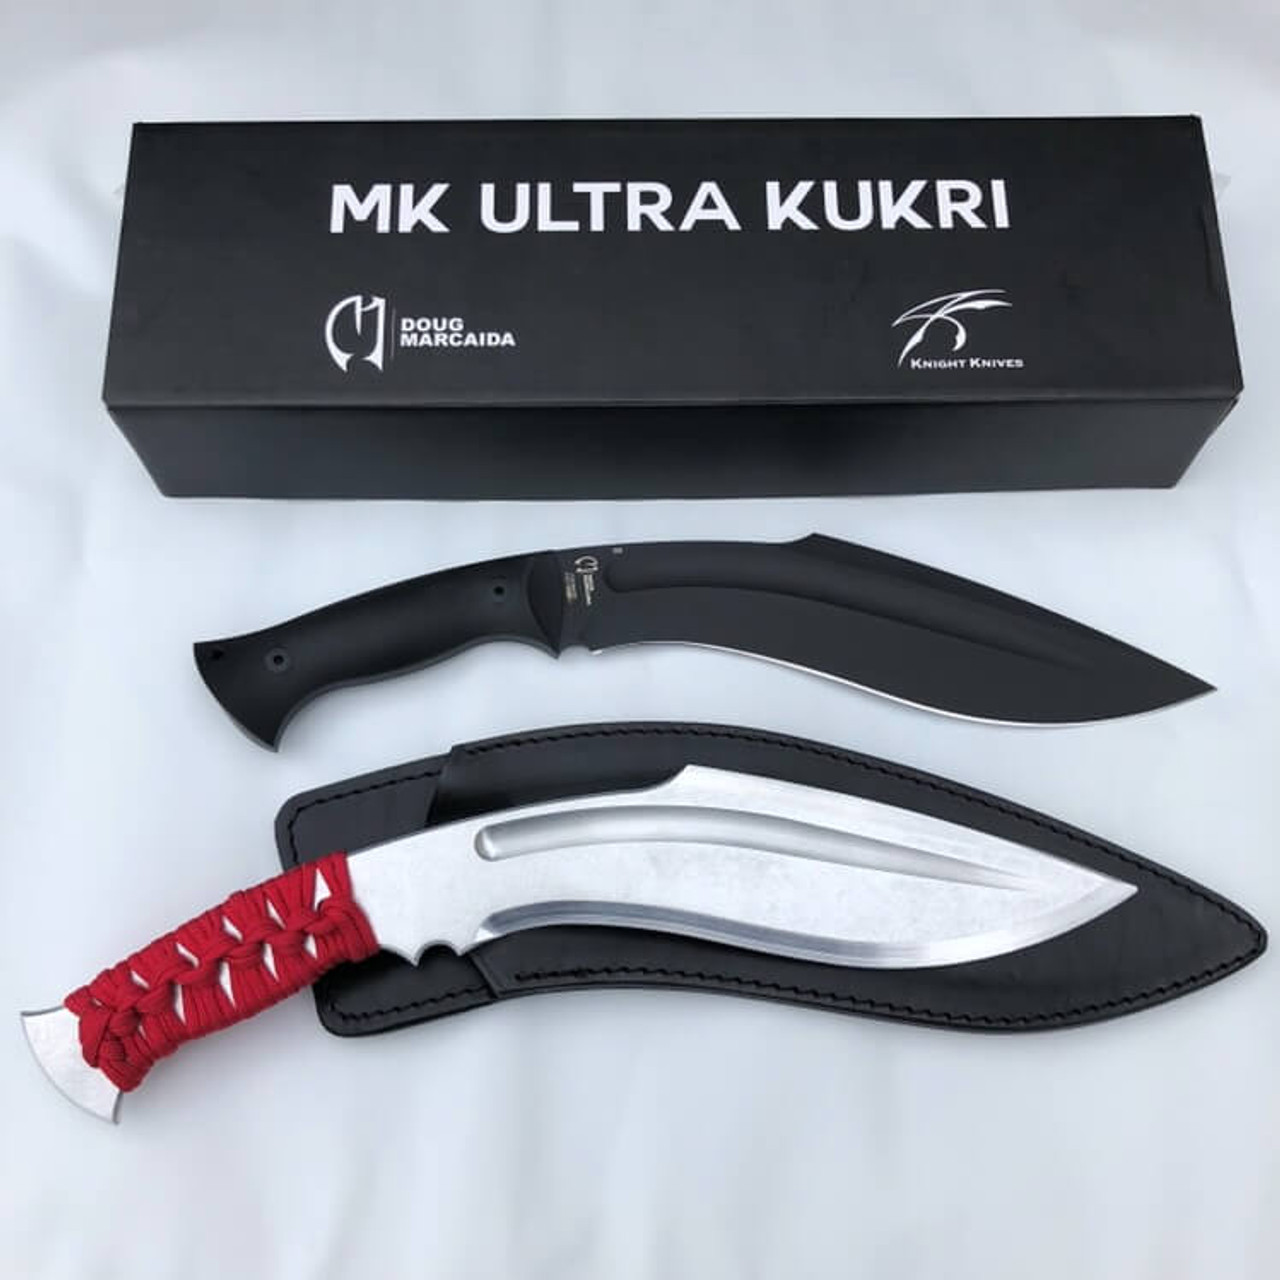 MK Ultra Kukuri - Doug Marcaida